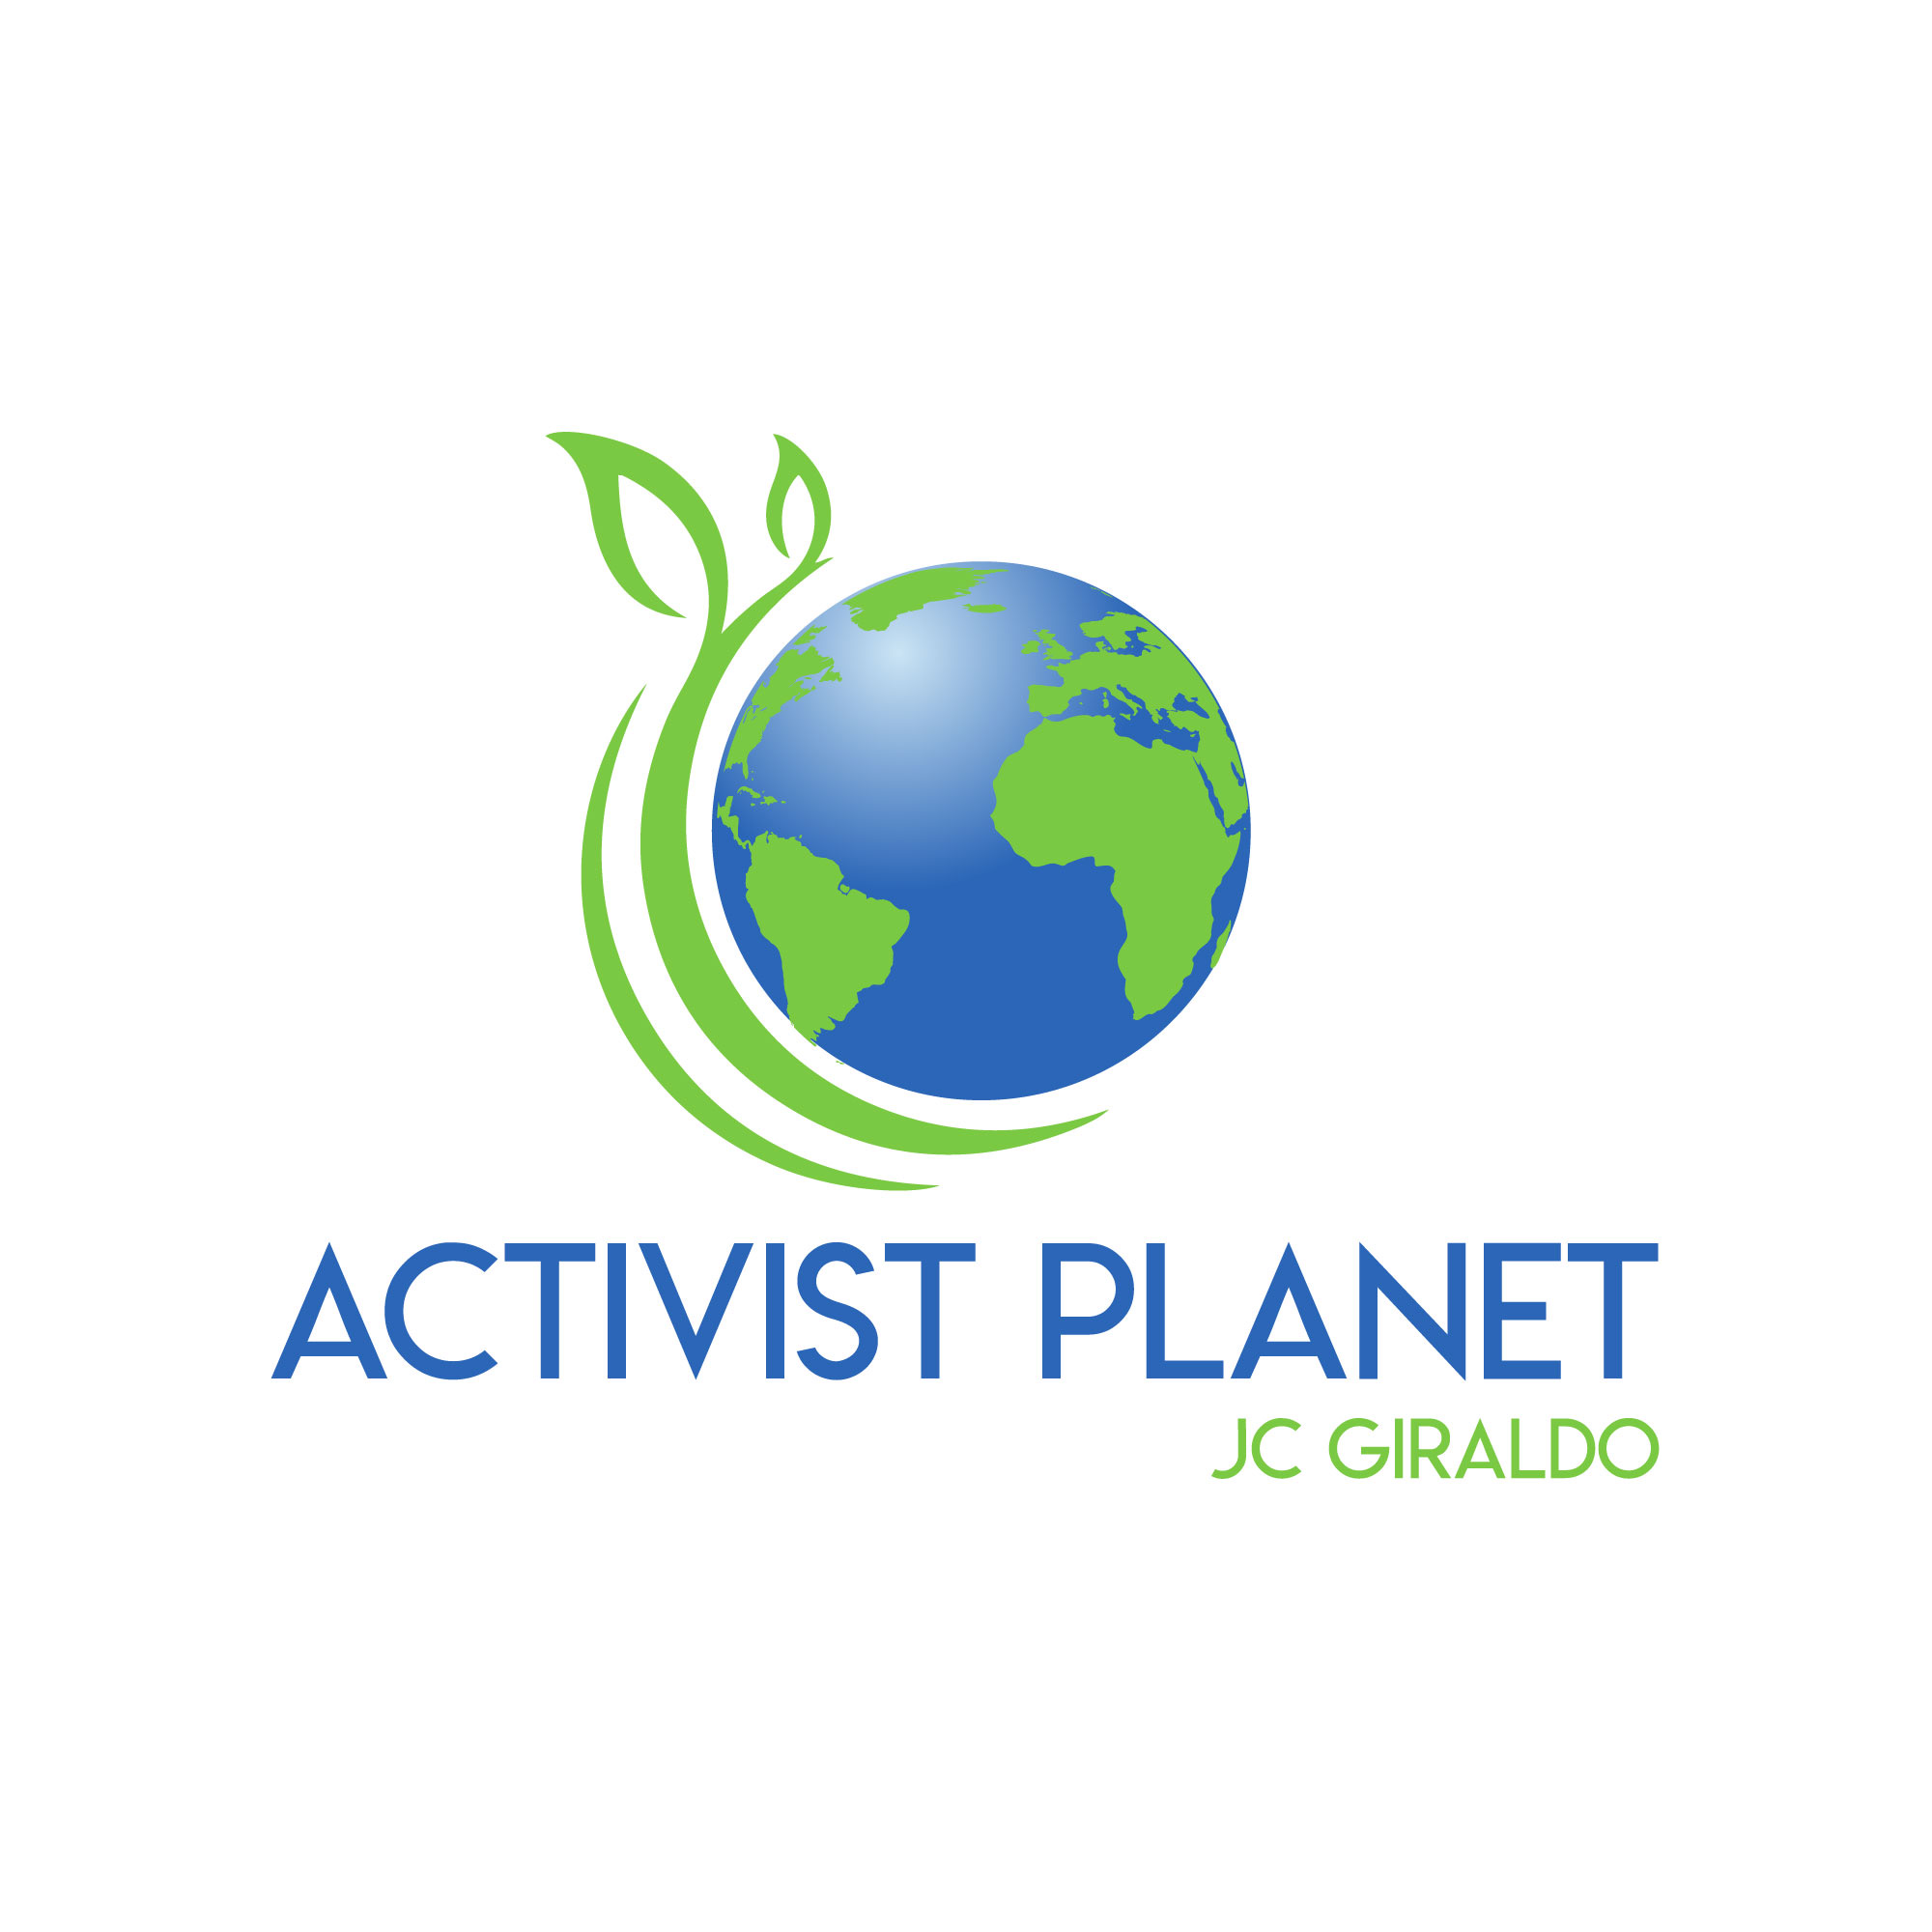 Activist Planet LOGO JPG